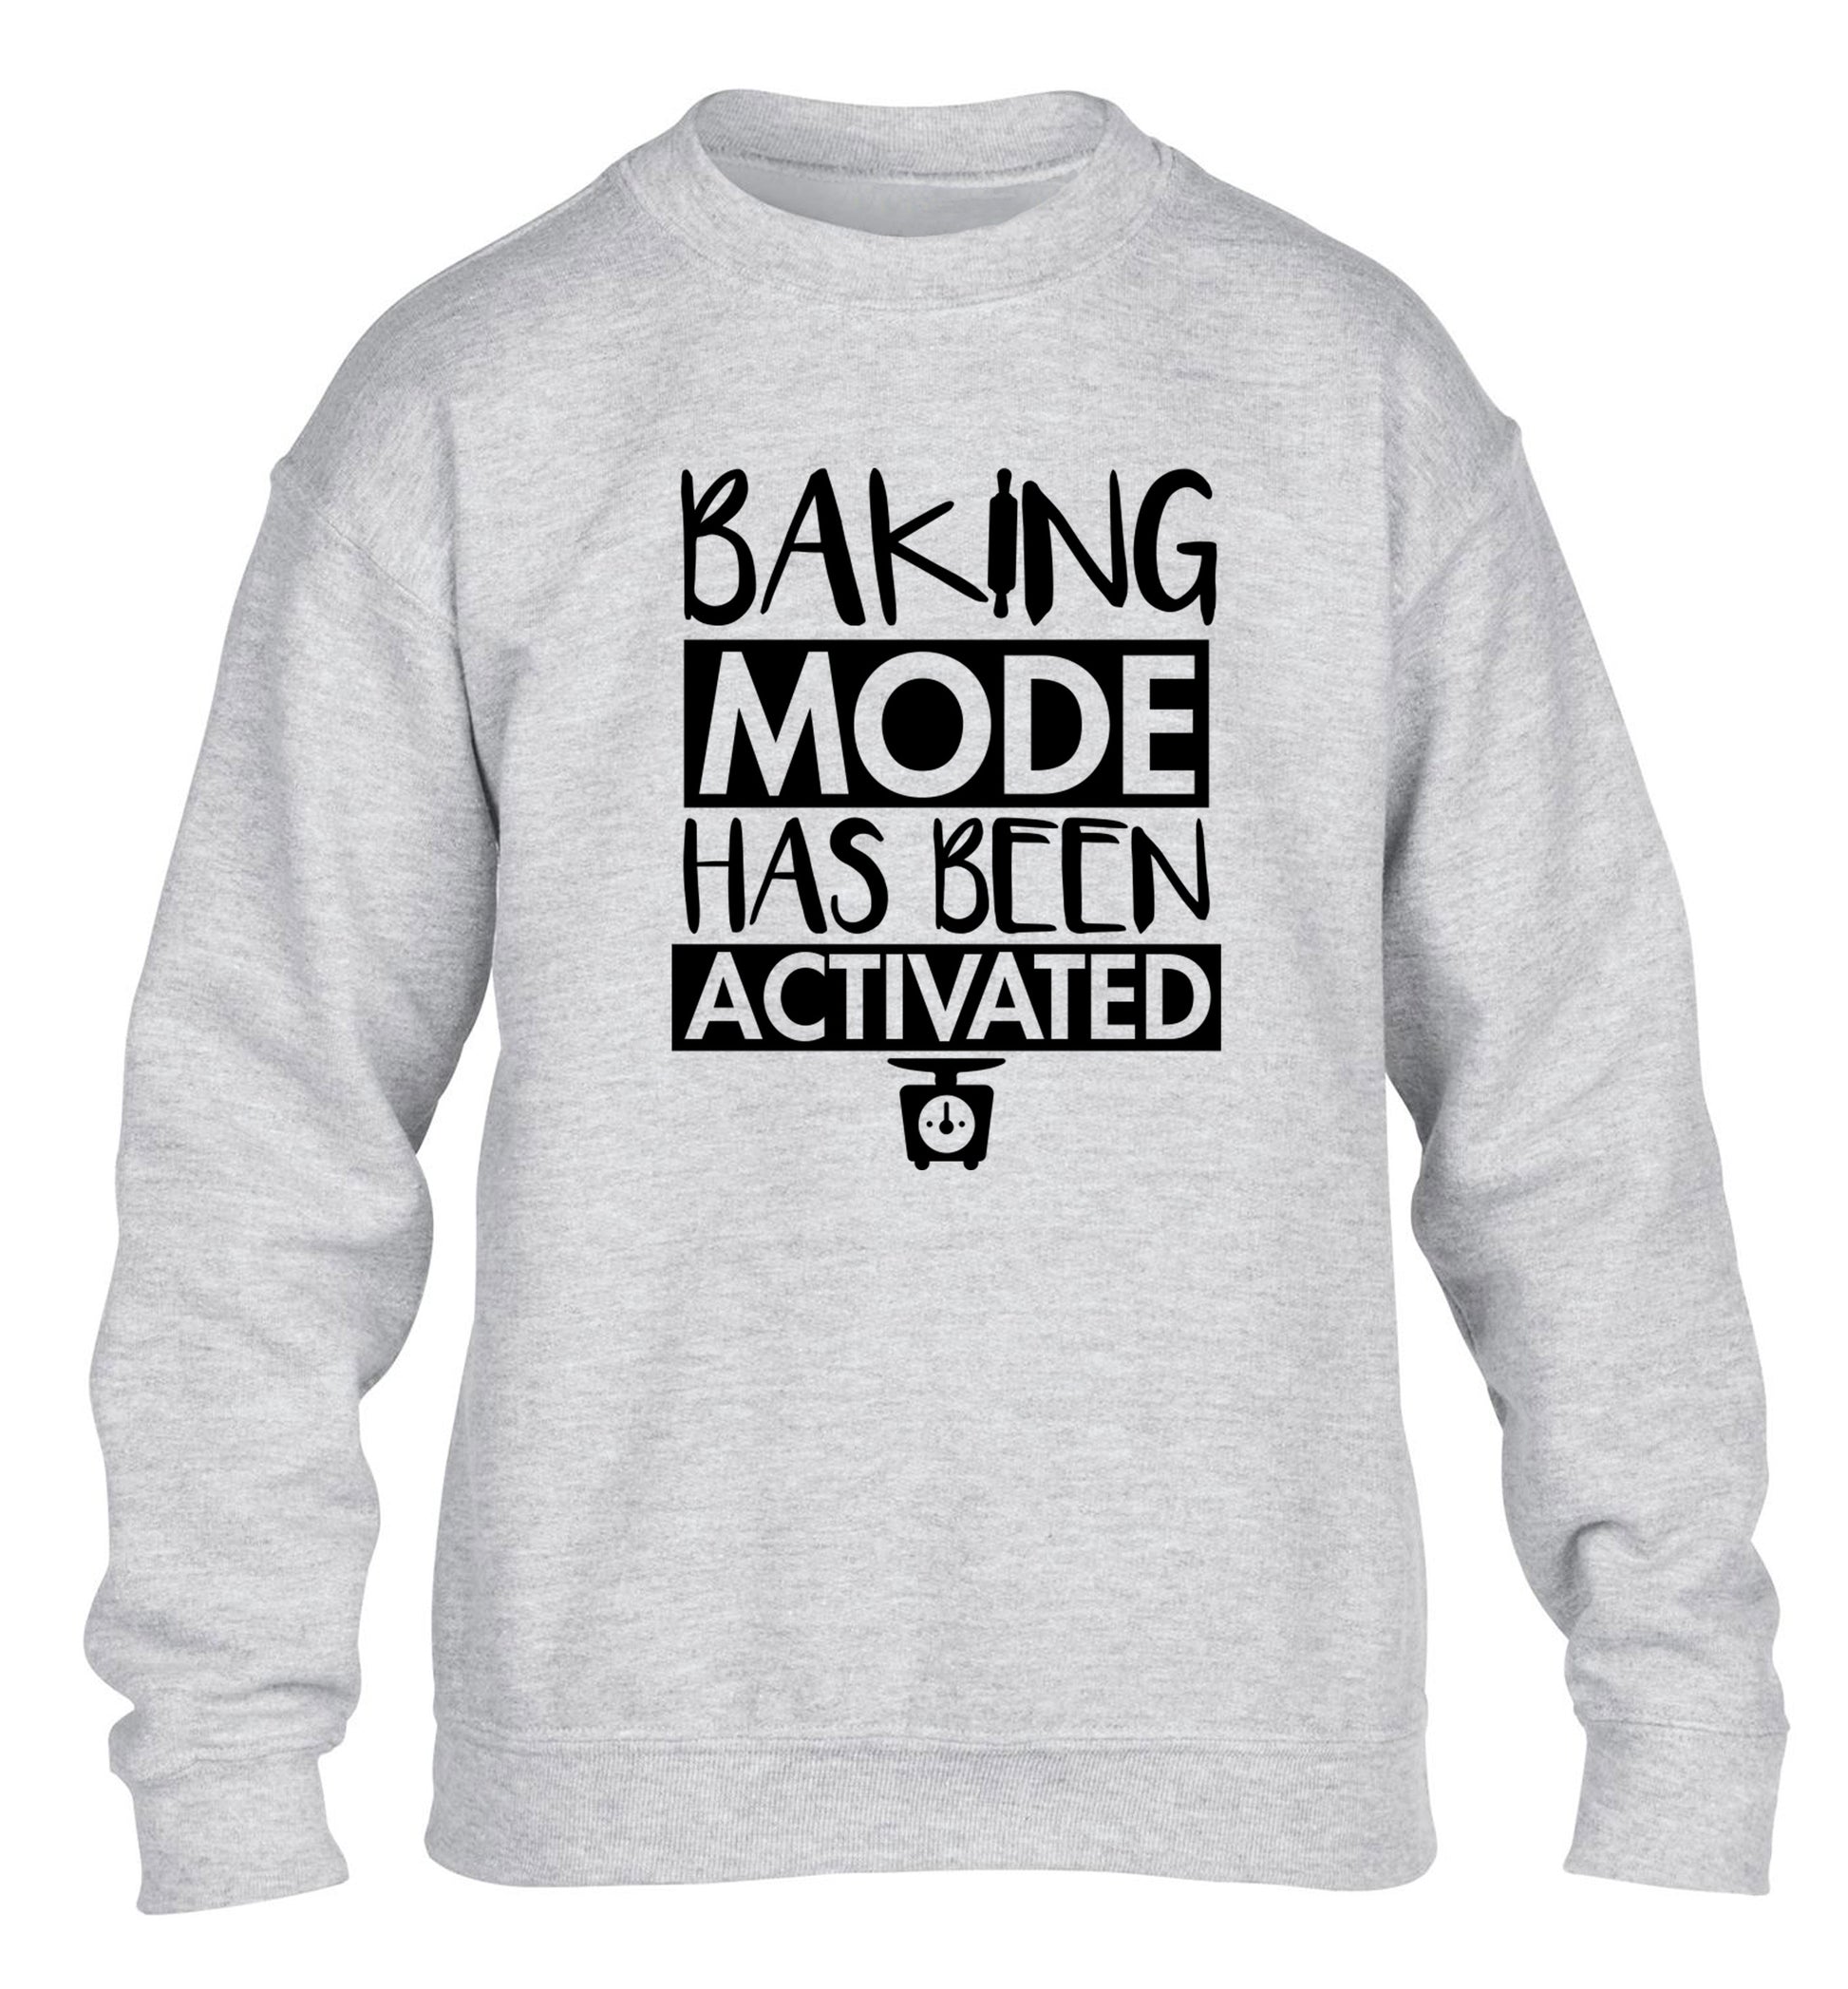 Baking mode has been activated children's grey sweater 12-14 Years